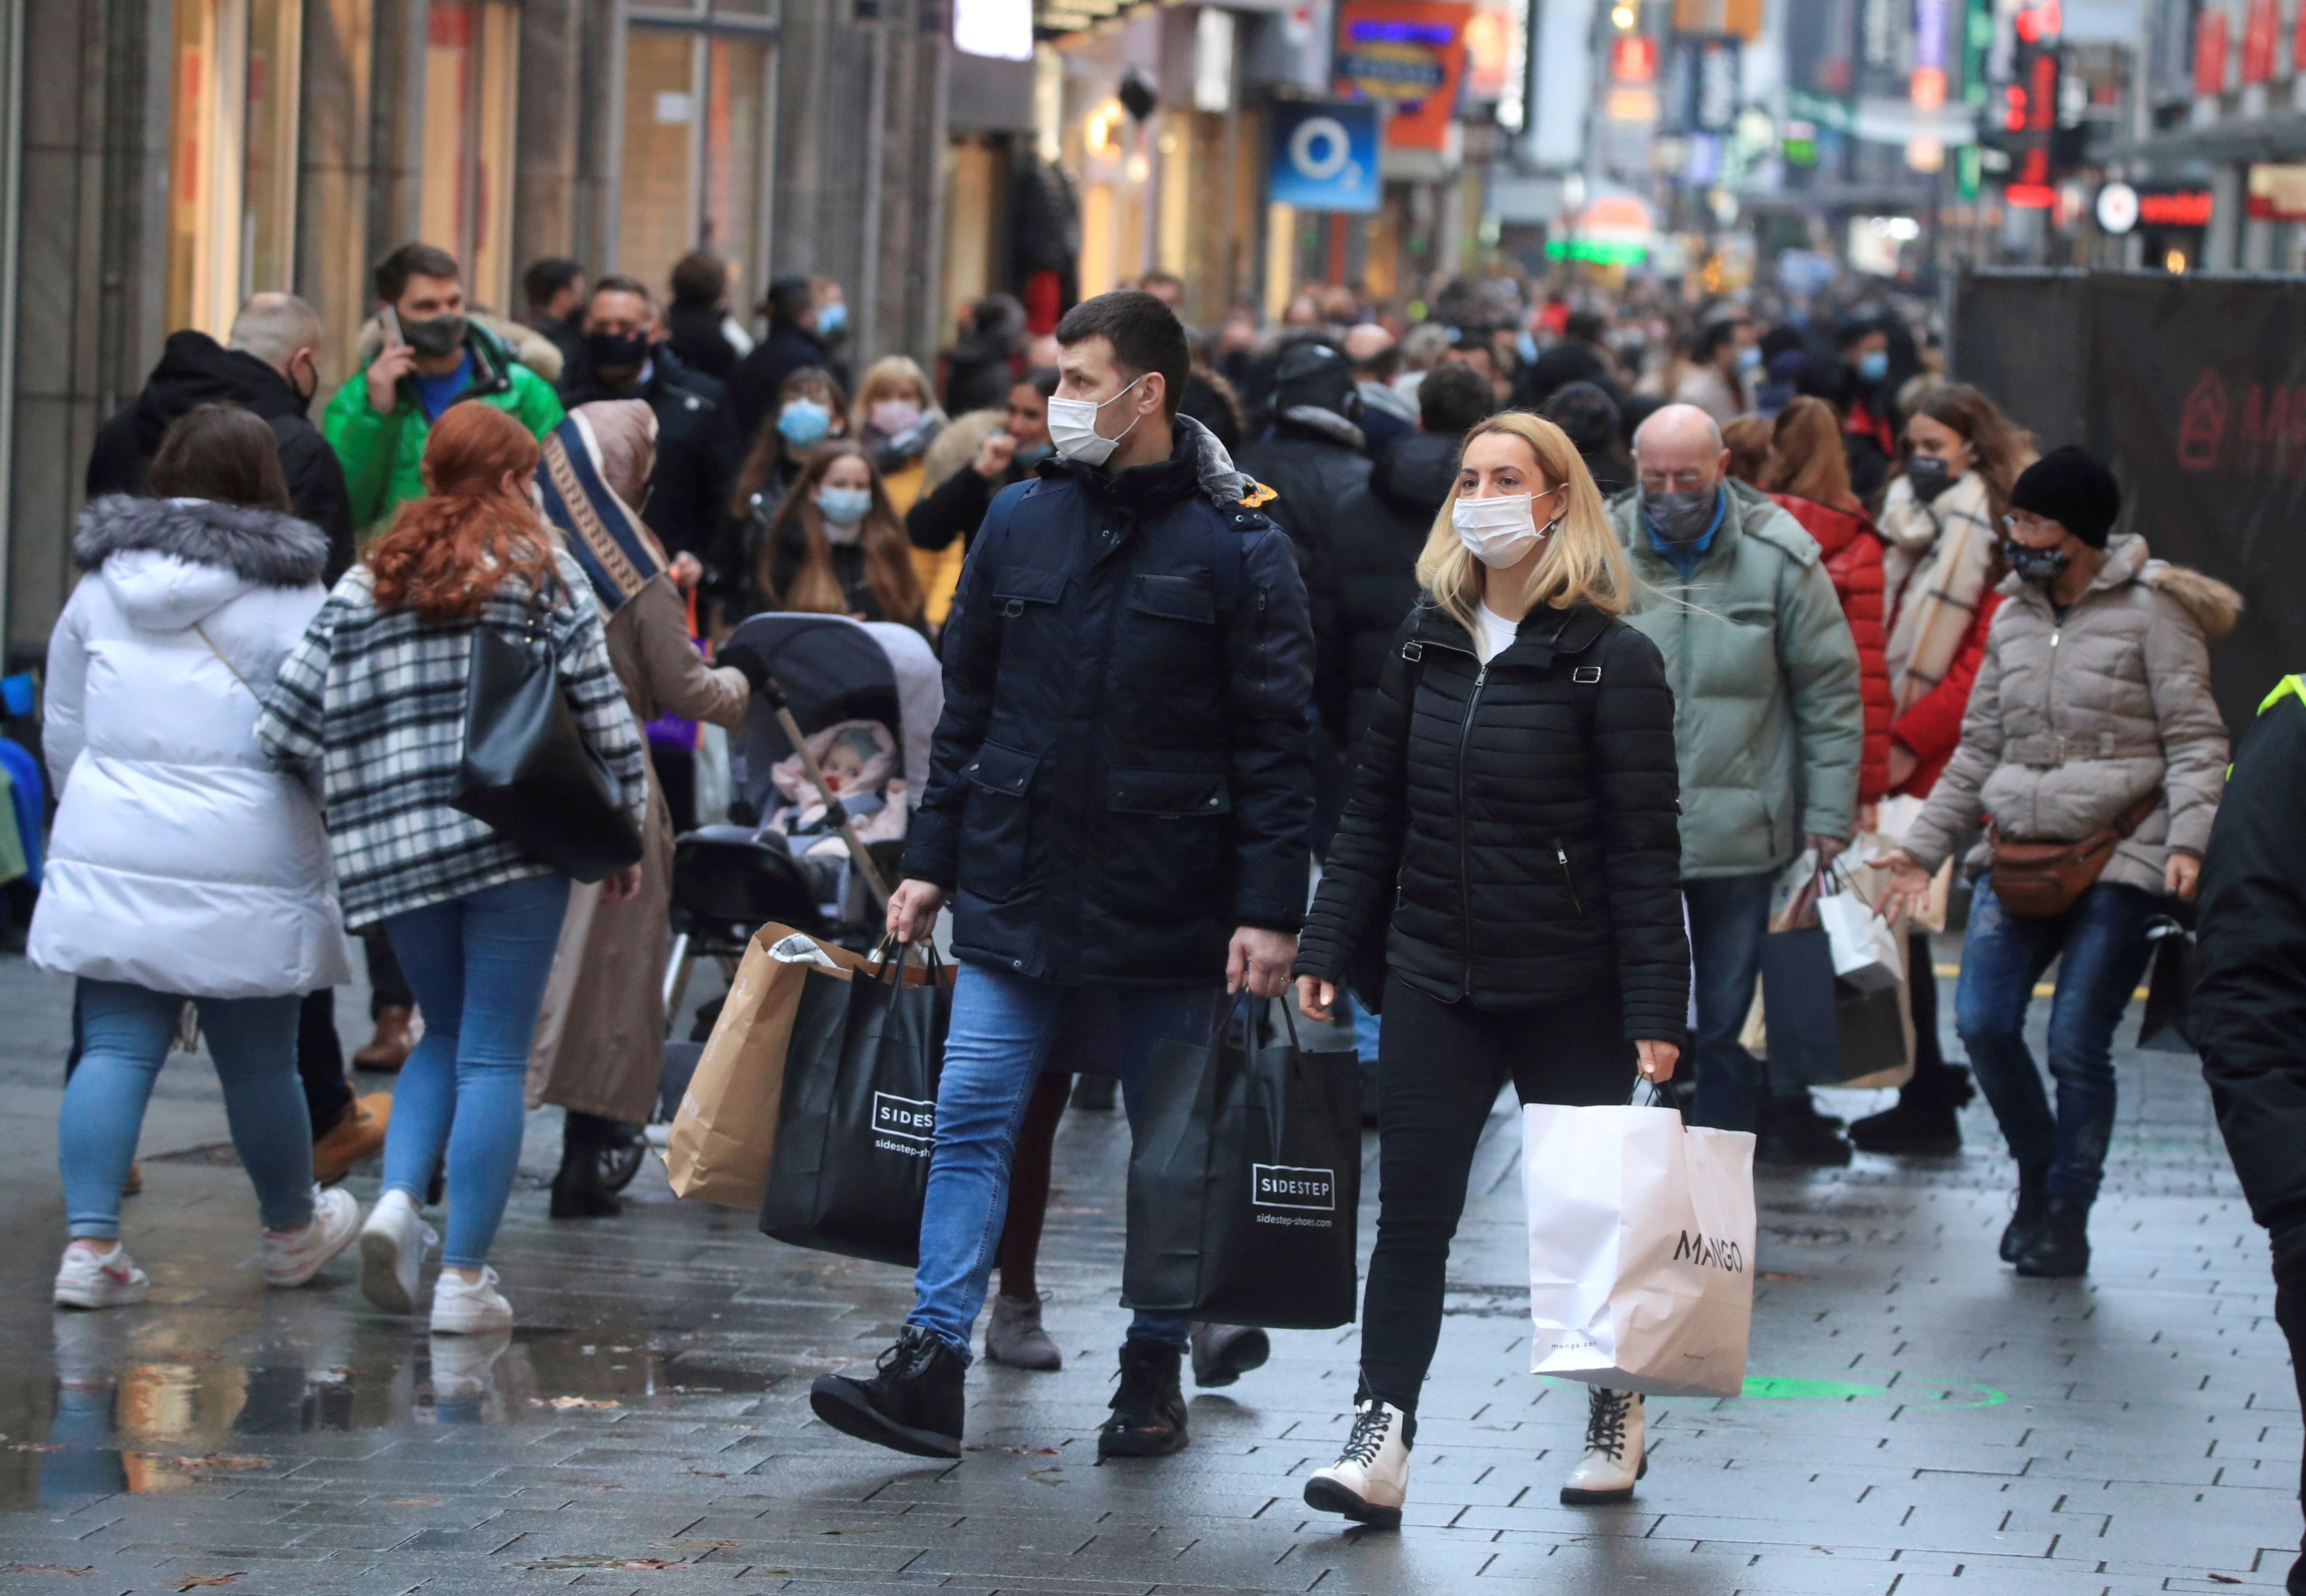 Cologne's shopping street during the coronavirus pandemic